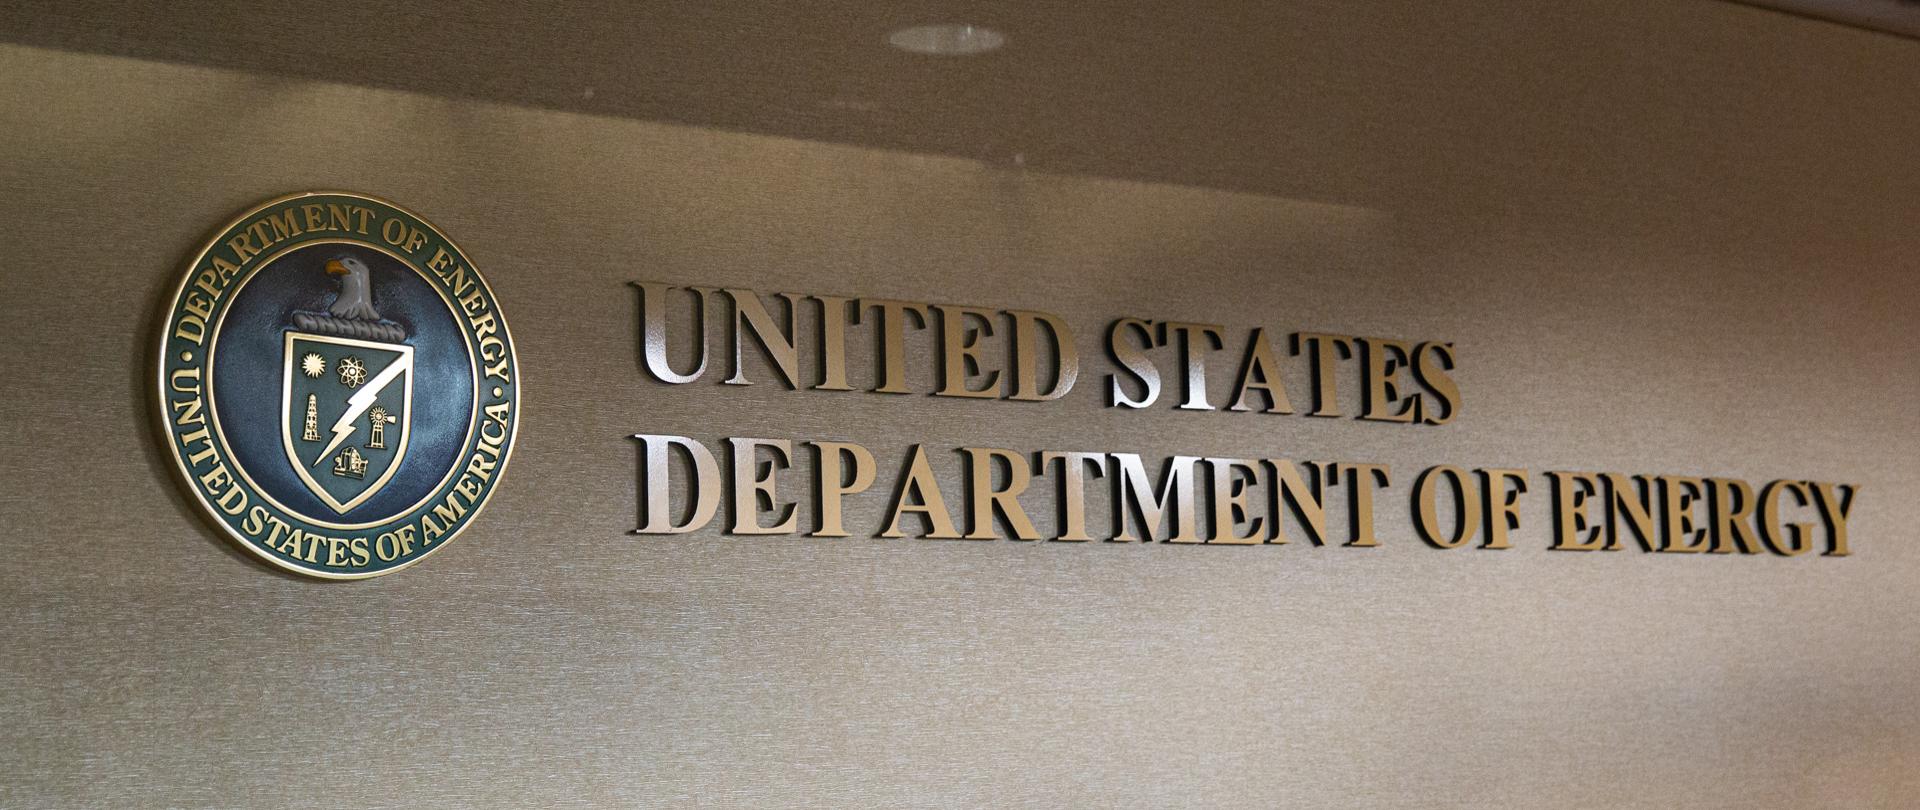 Wejście do budynku. Logo oraz napis United States Department of Energy